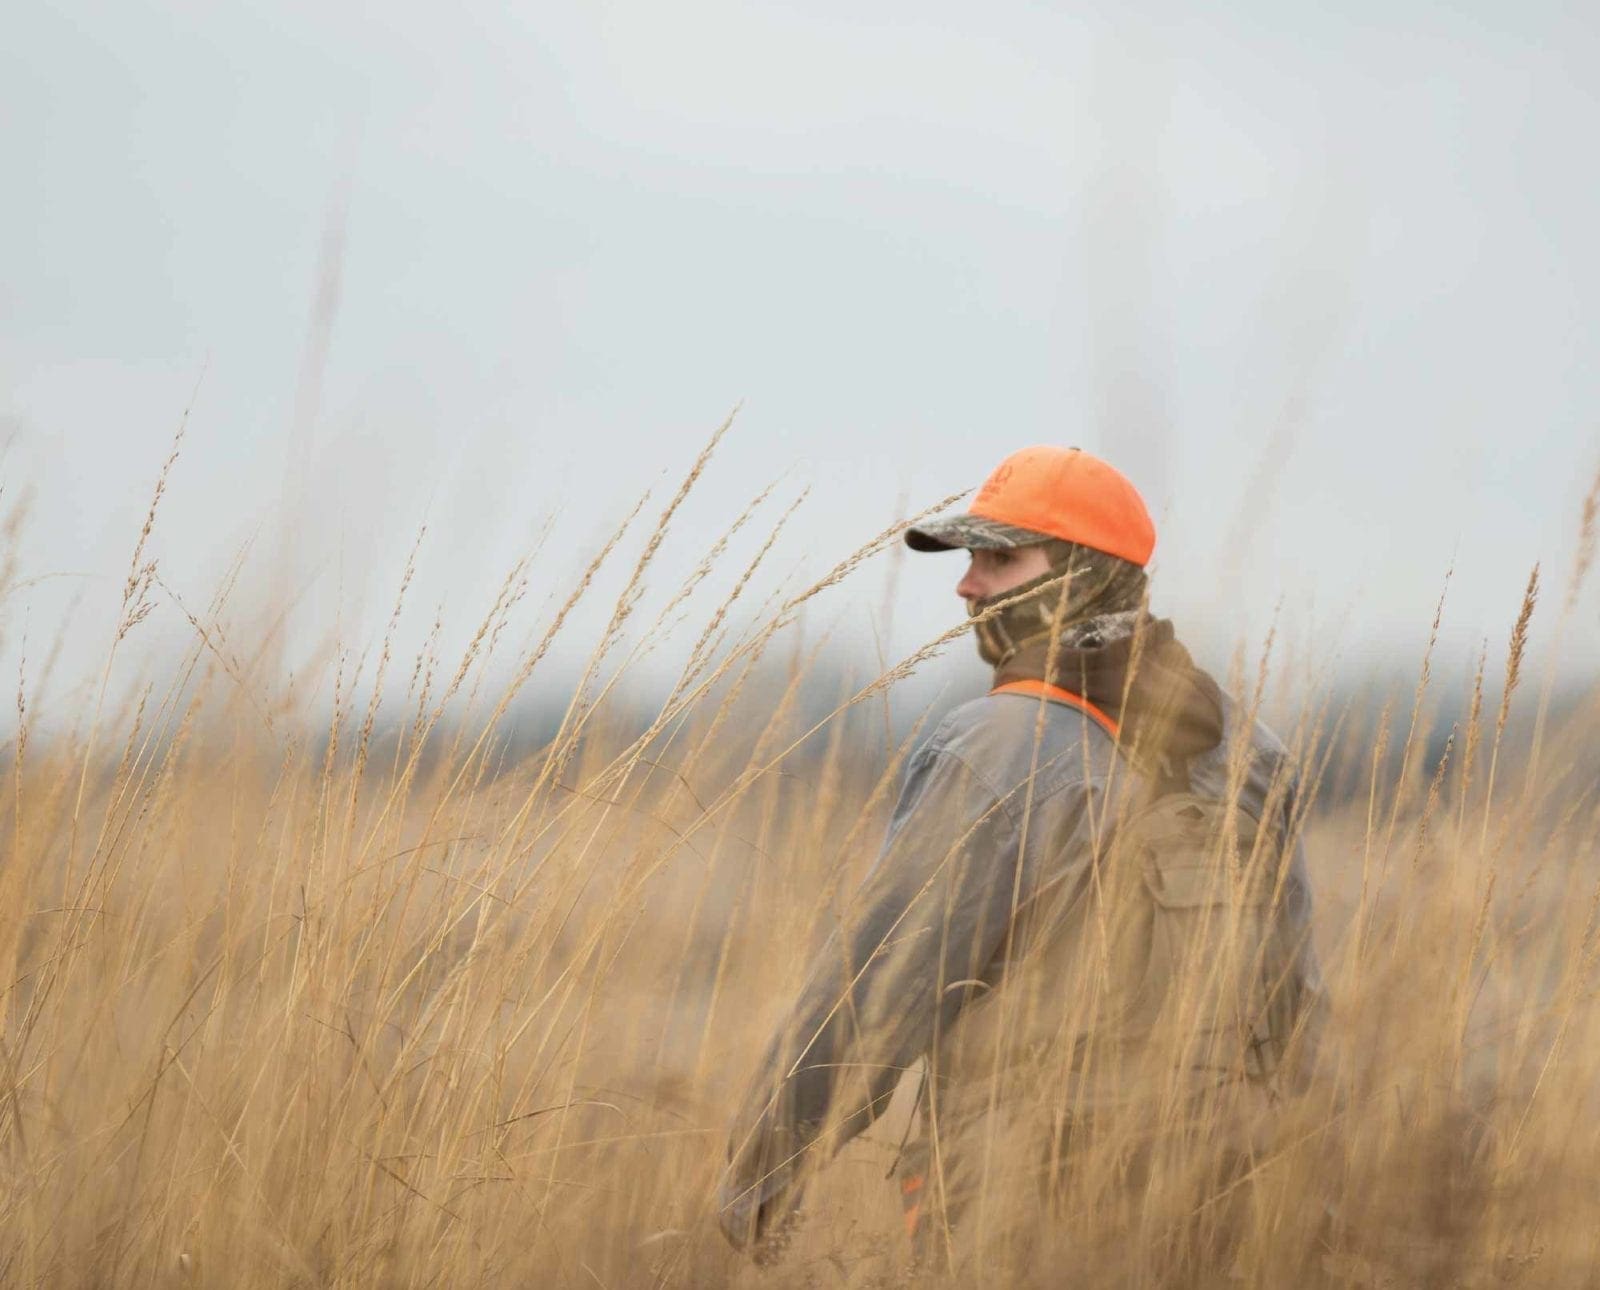 A Pheasant hunter walks alone in a field